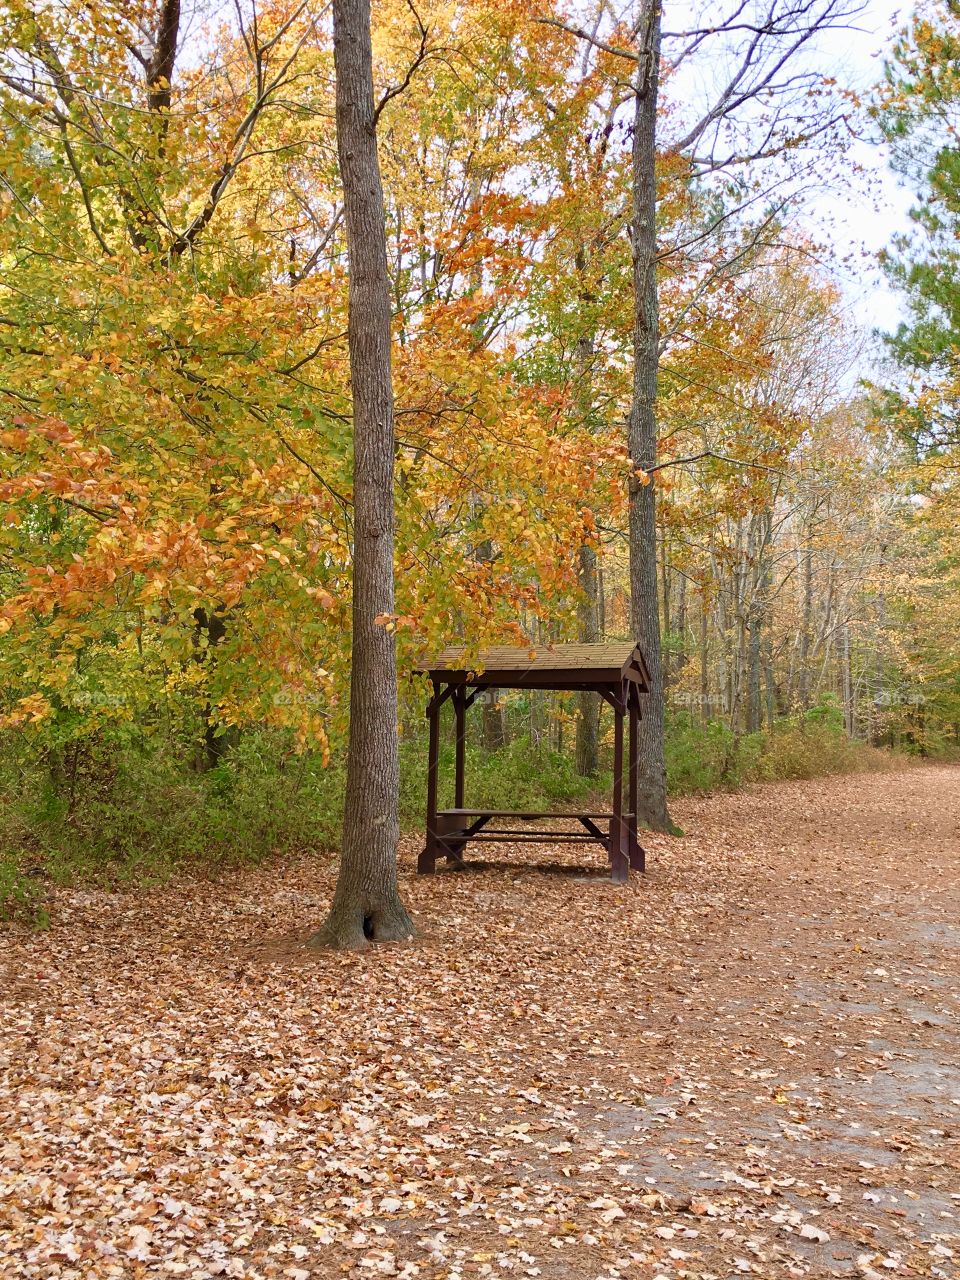 Picnic area on trail with fall foliage